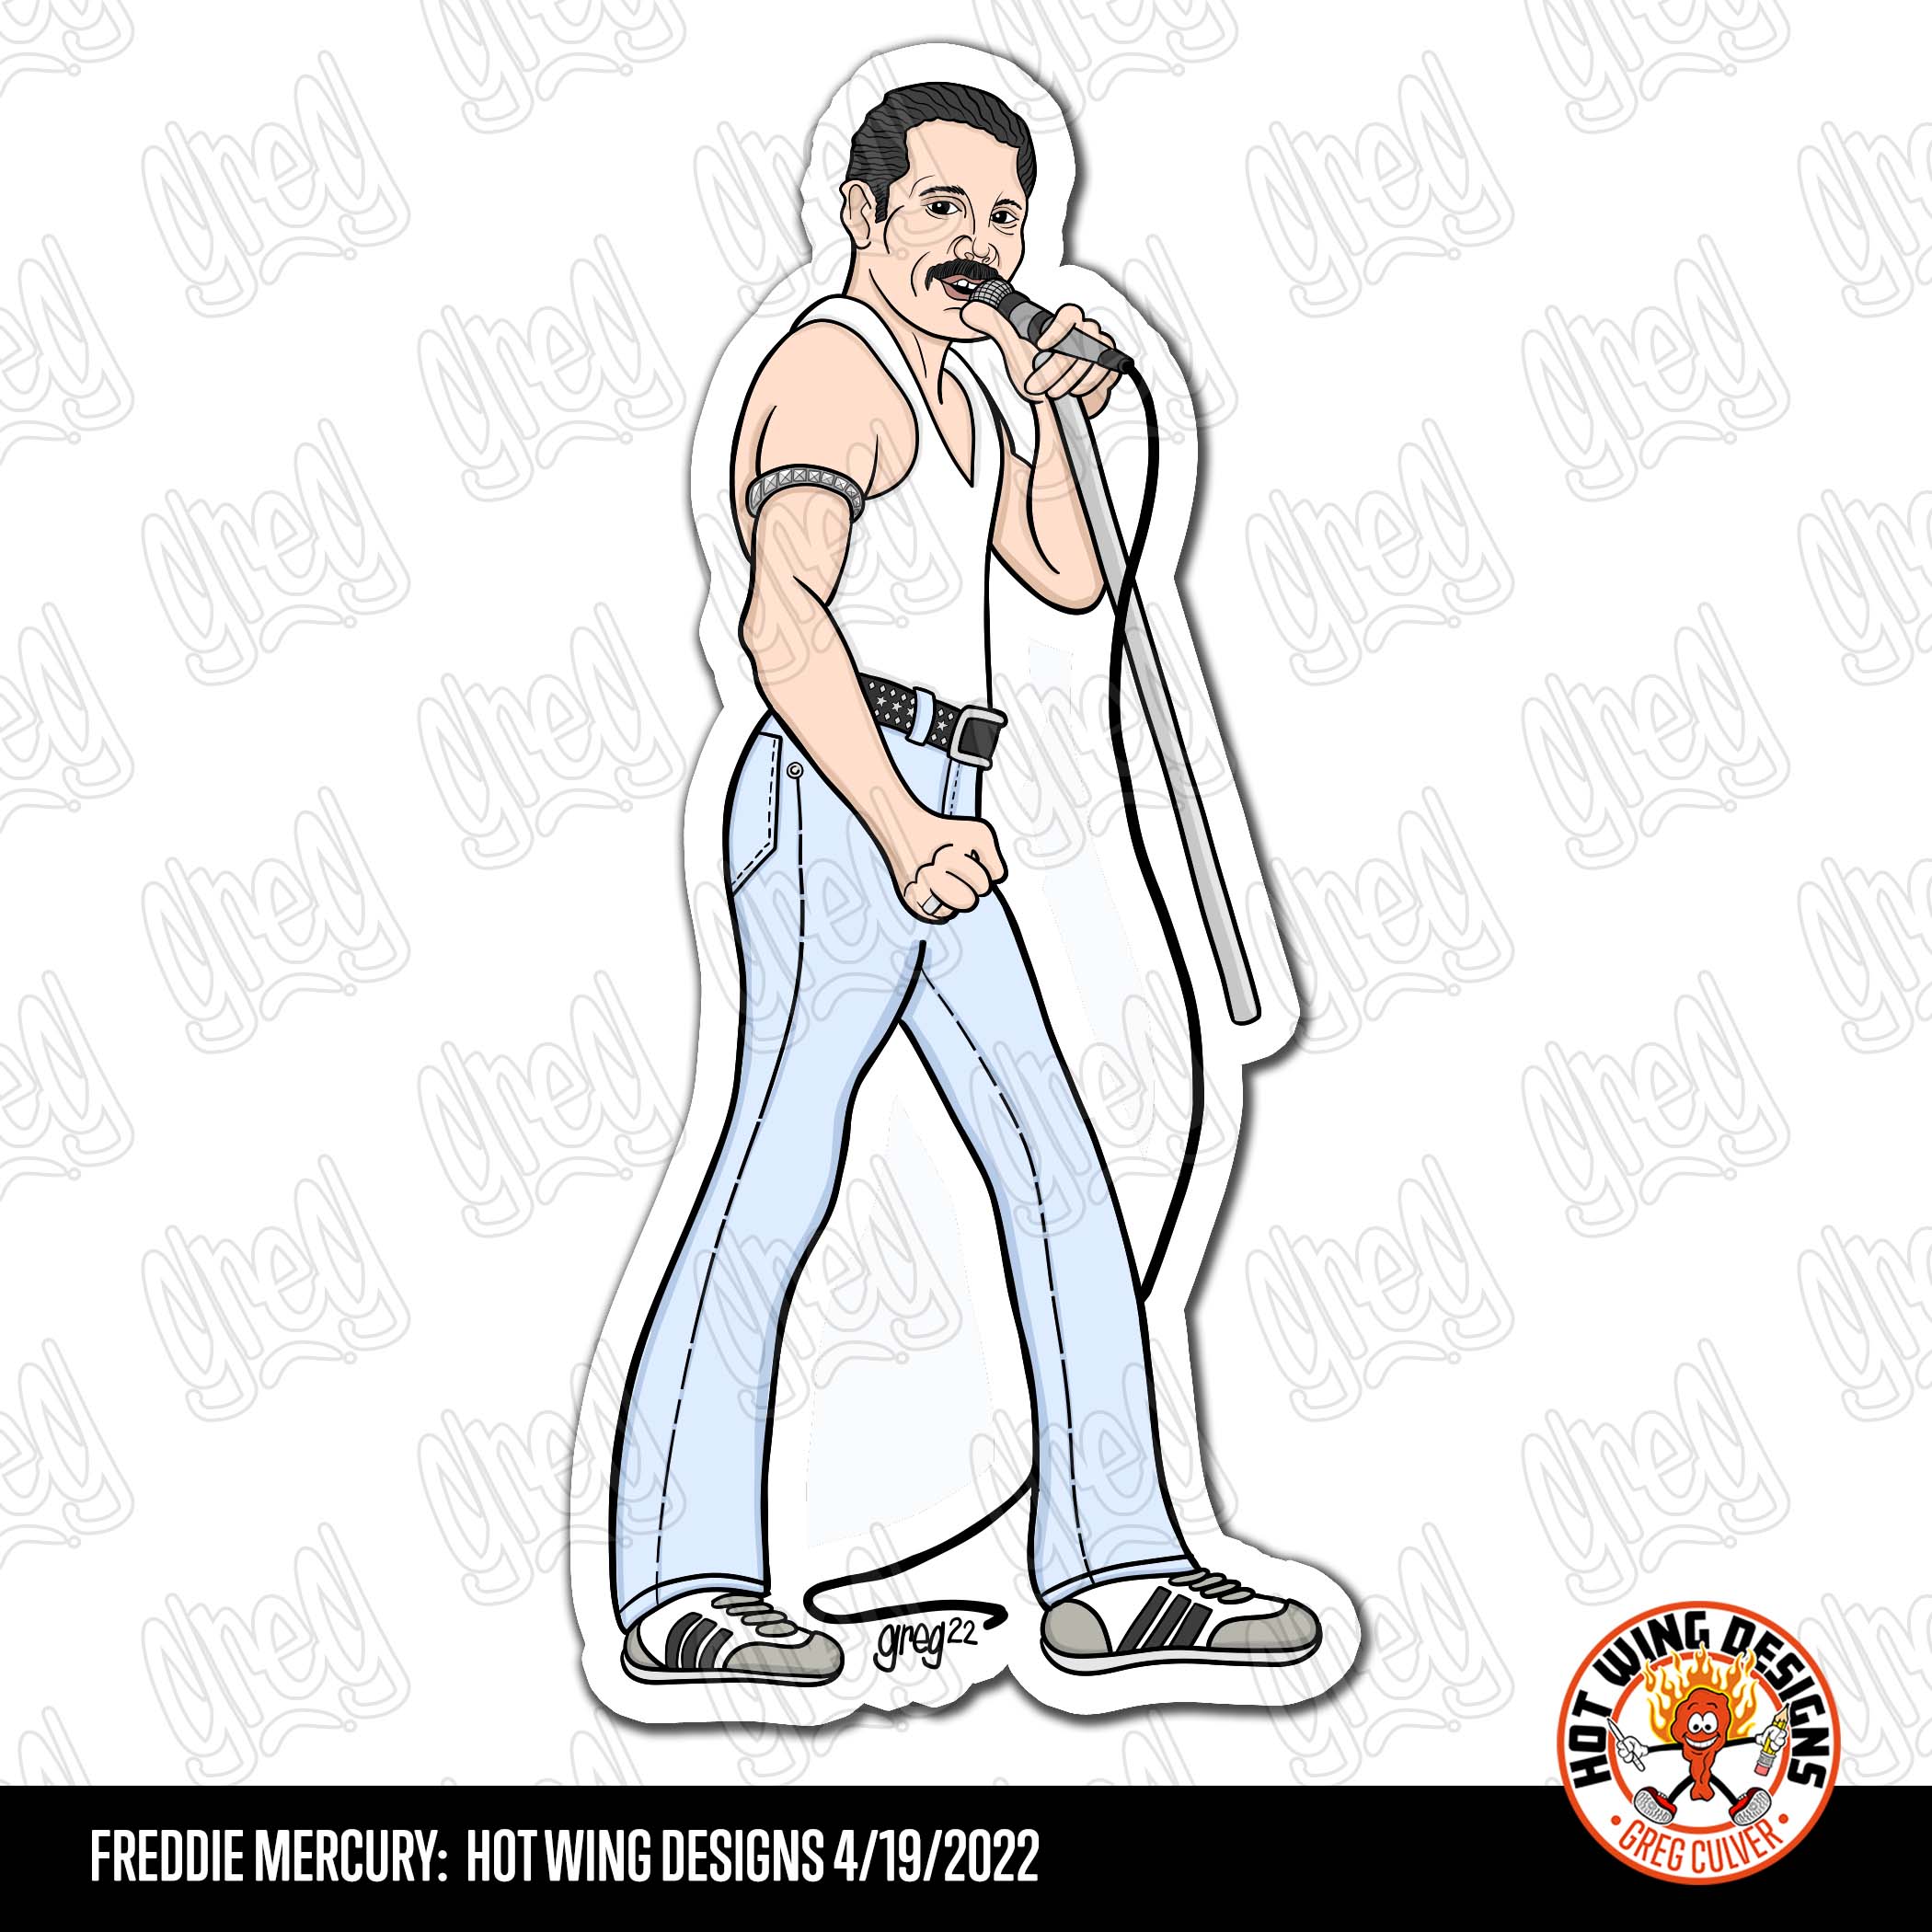 Freddie Mercury cartoon sticker by Hot Wing Designs